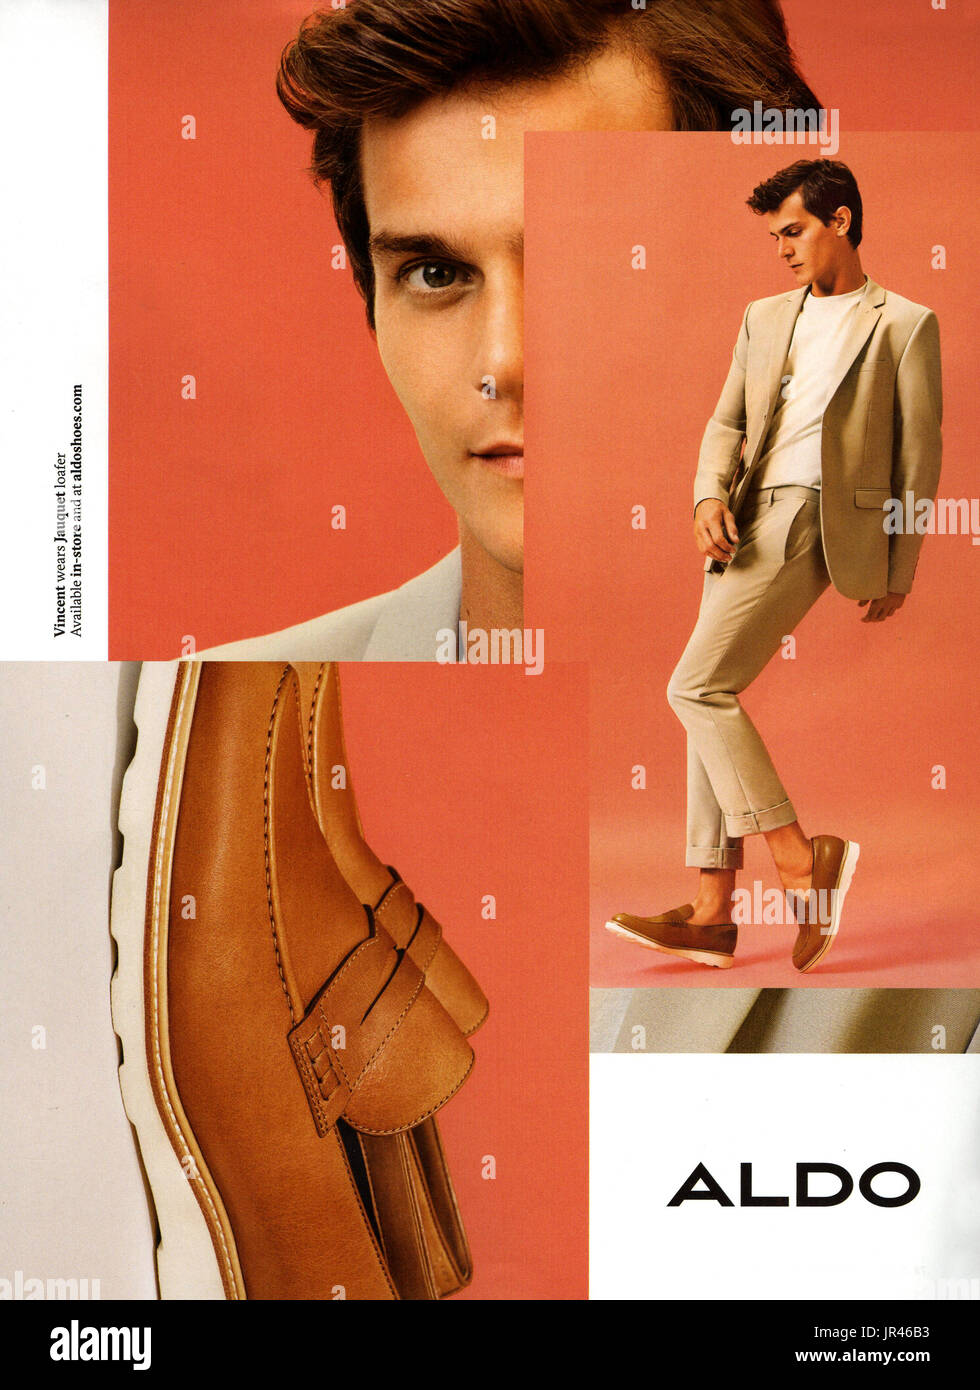 2010s UK Aldo Magazine Advert Stock Photo - Alamy